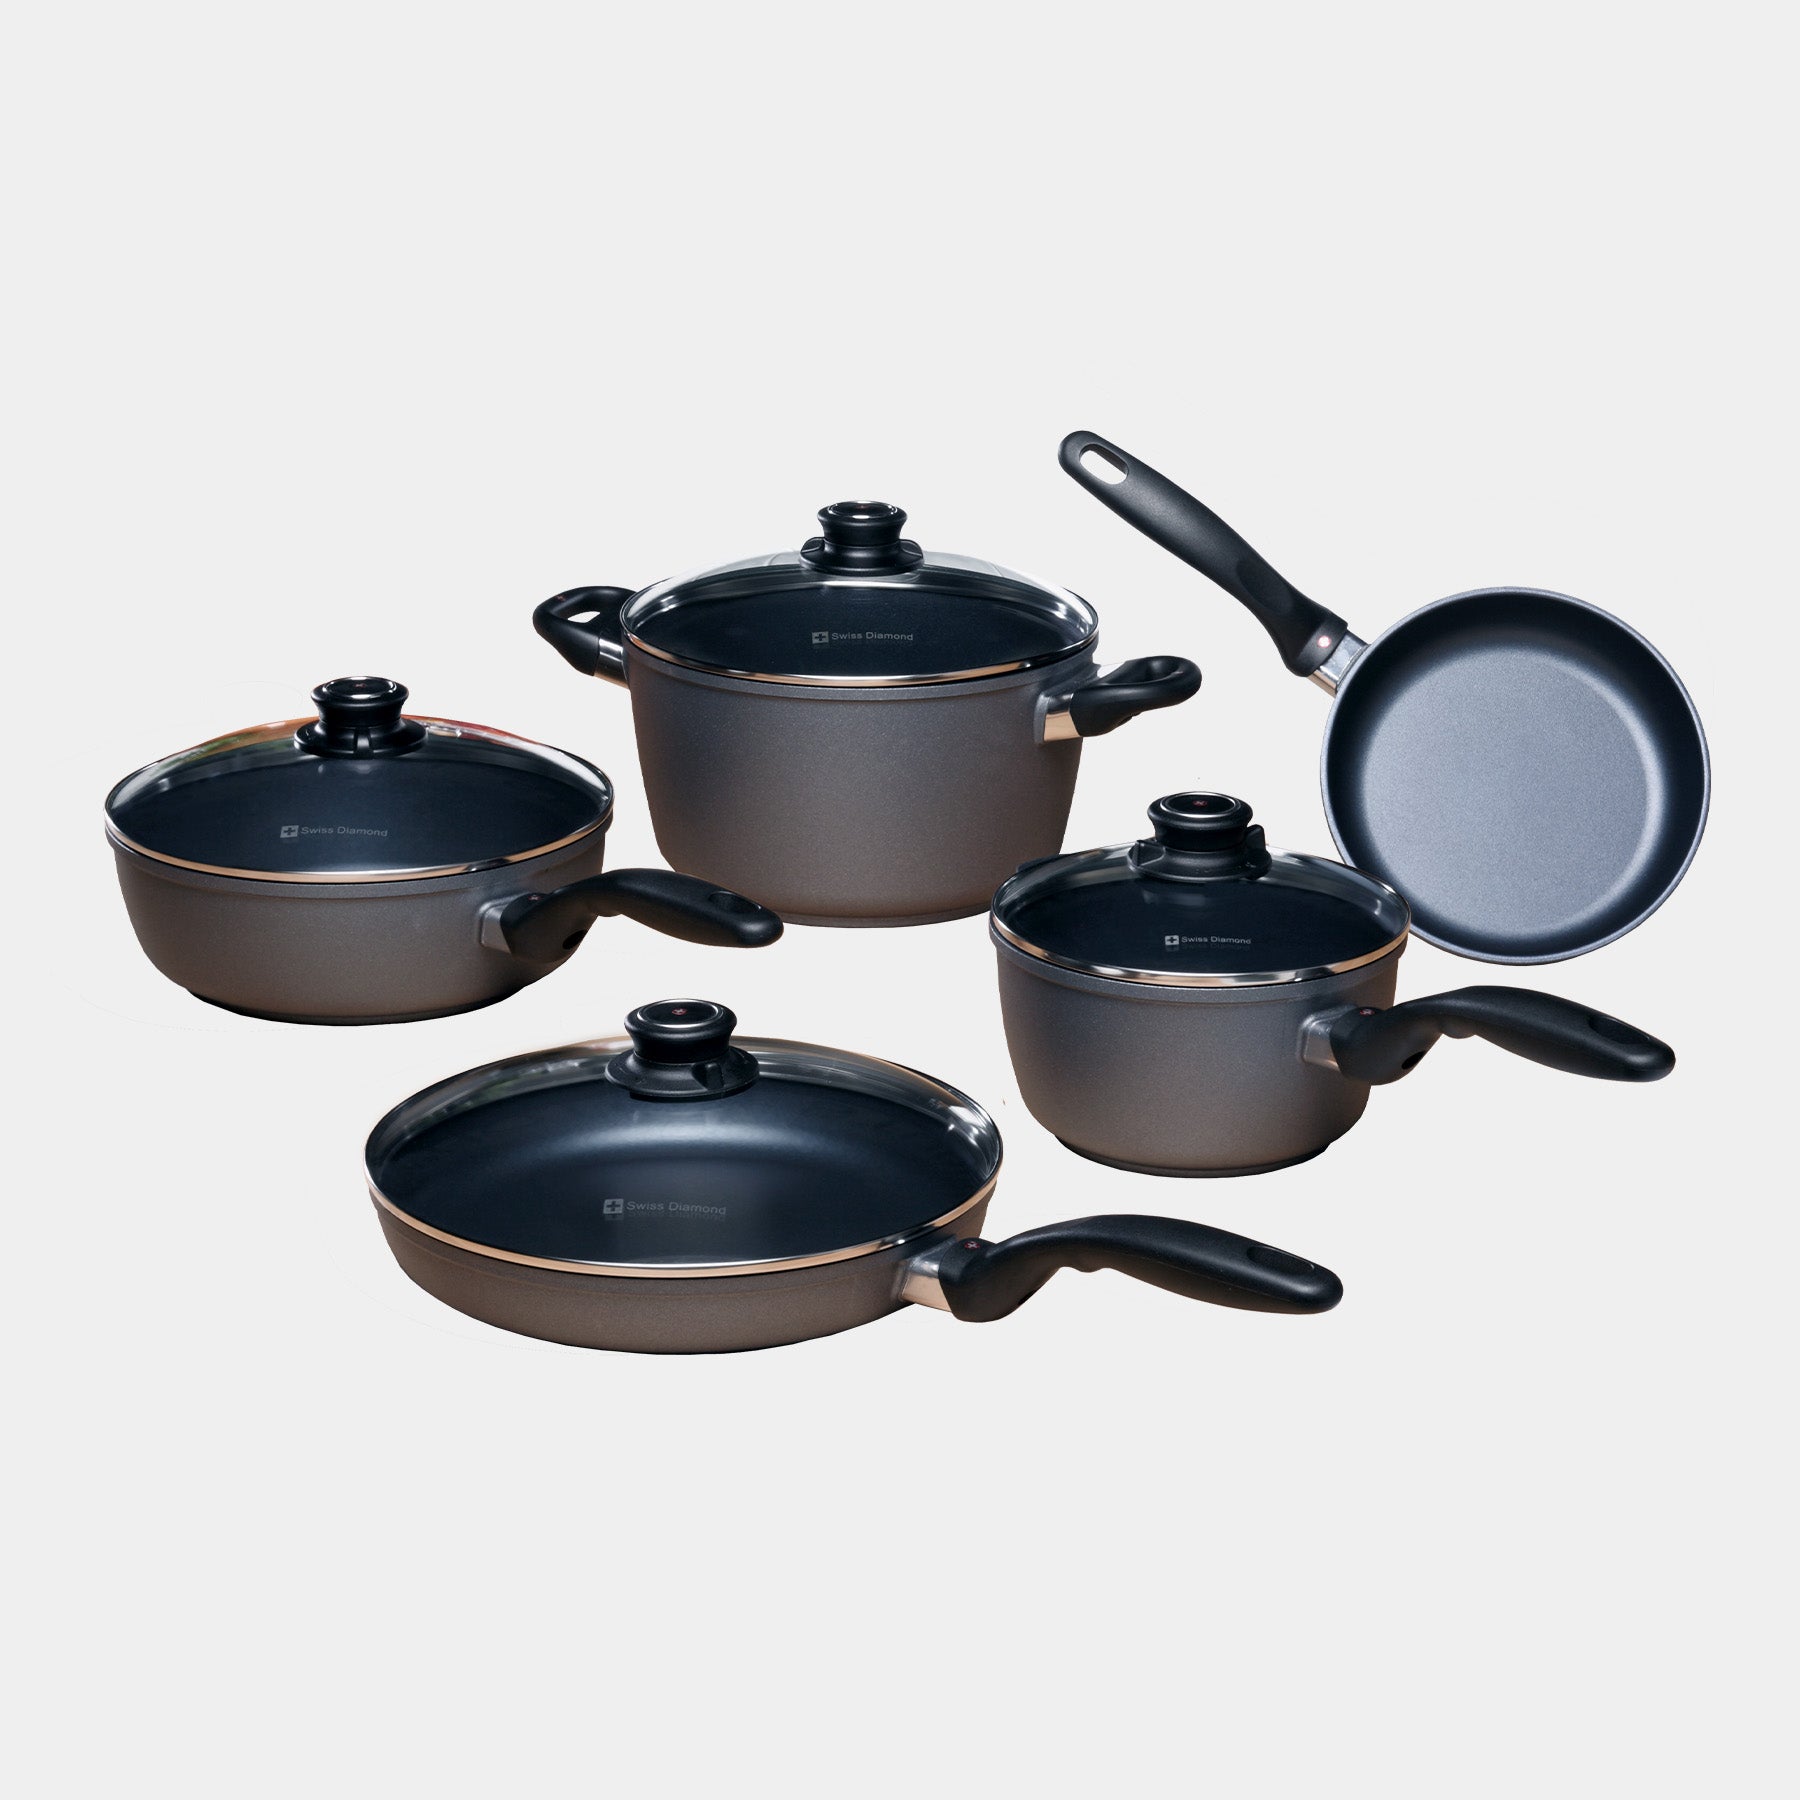 HD Nonstick 9-Piece Set - Kitchen Essentials Set Includes: 9.5" Fry Pan + 1.4 qt Saucepan with Lid + 2.2 qt Saucepan with Lid + 4.3 qt Saute Pan with Lid + 5.5 qt Soup Pot with Lid.